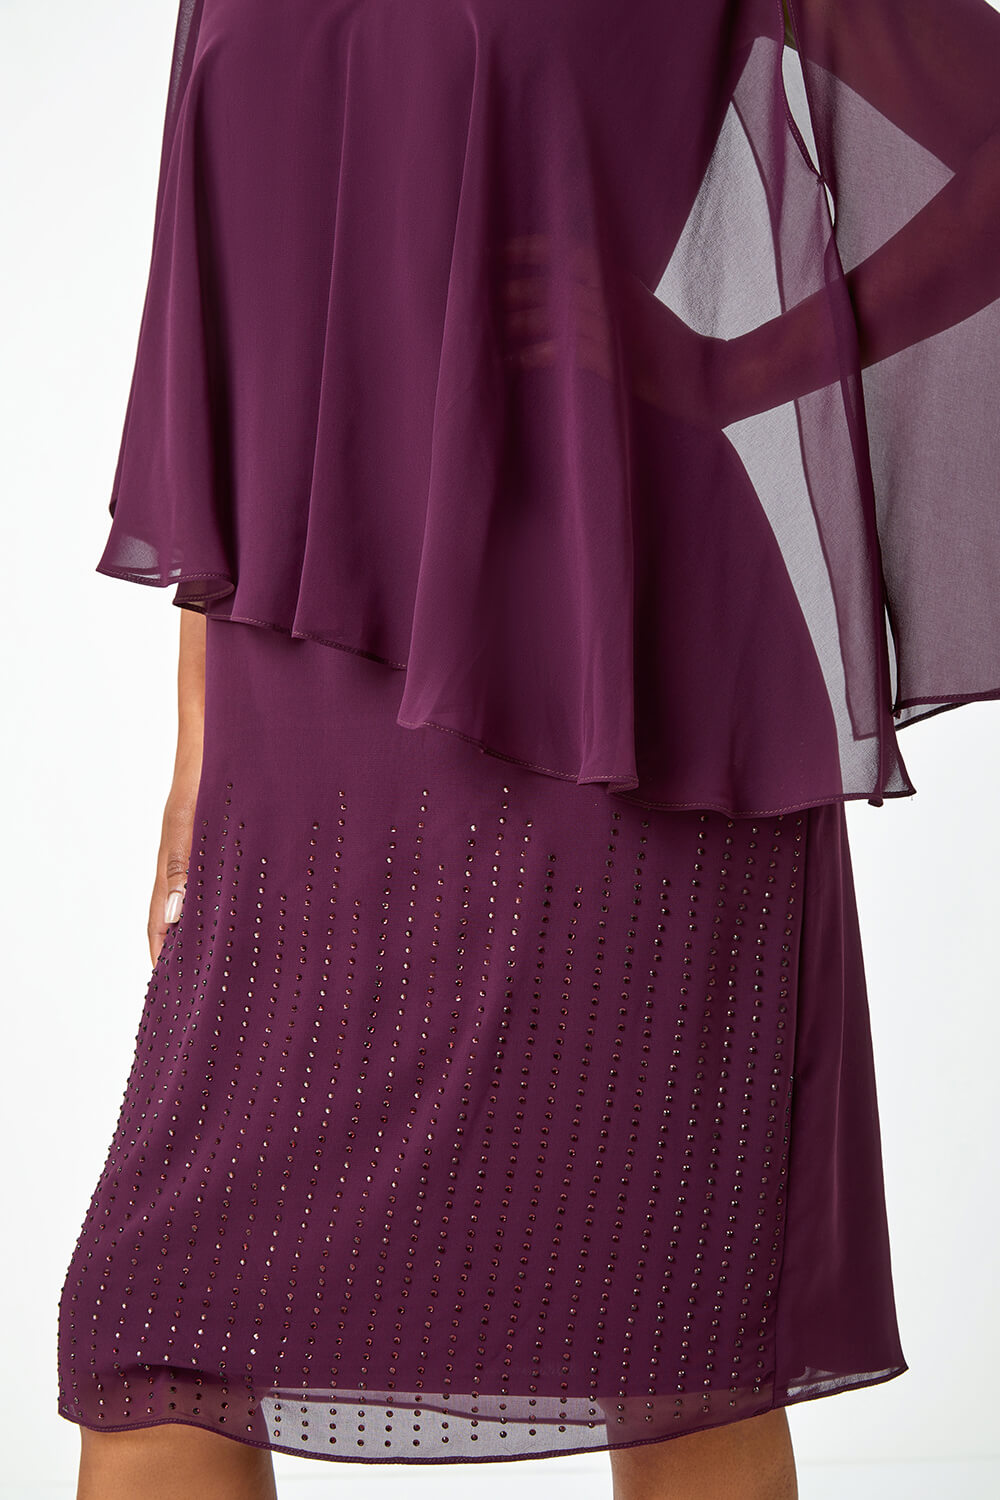 Plum Petite Embellished Chiffon Overlay Dress, Image 5 of 5